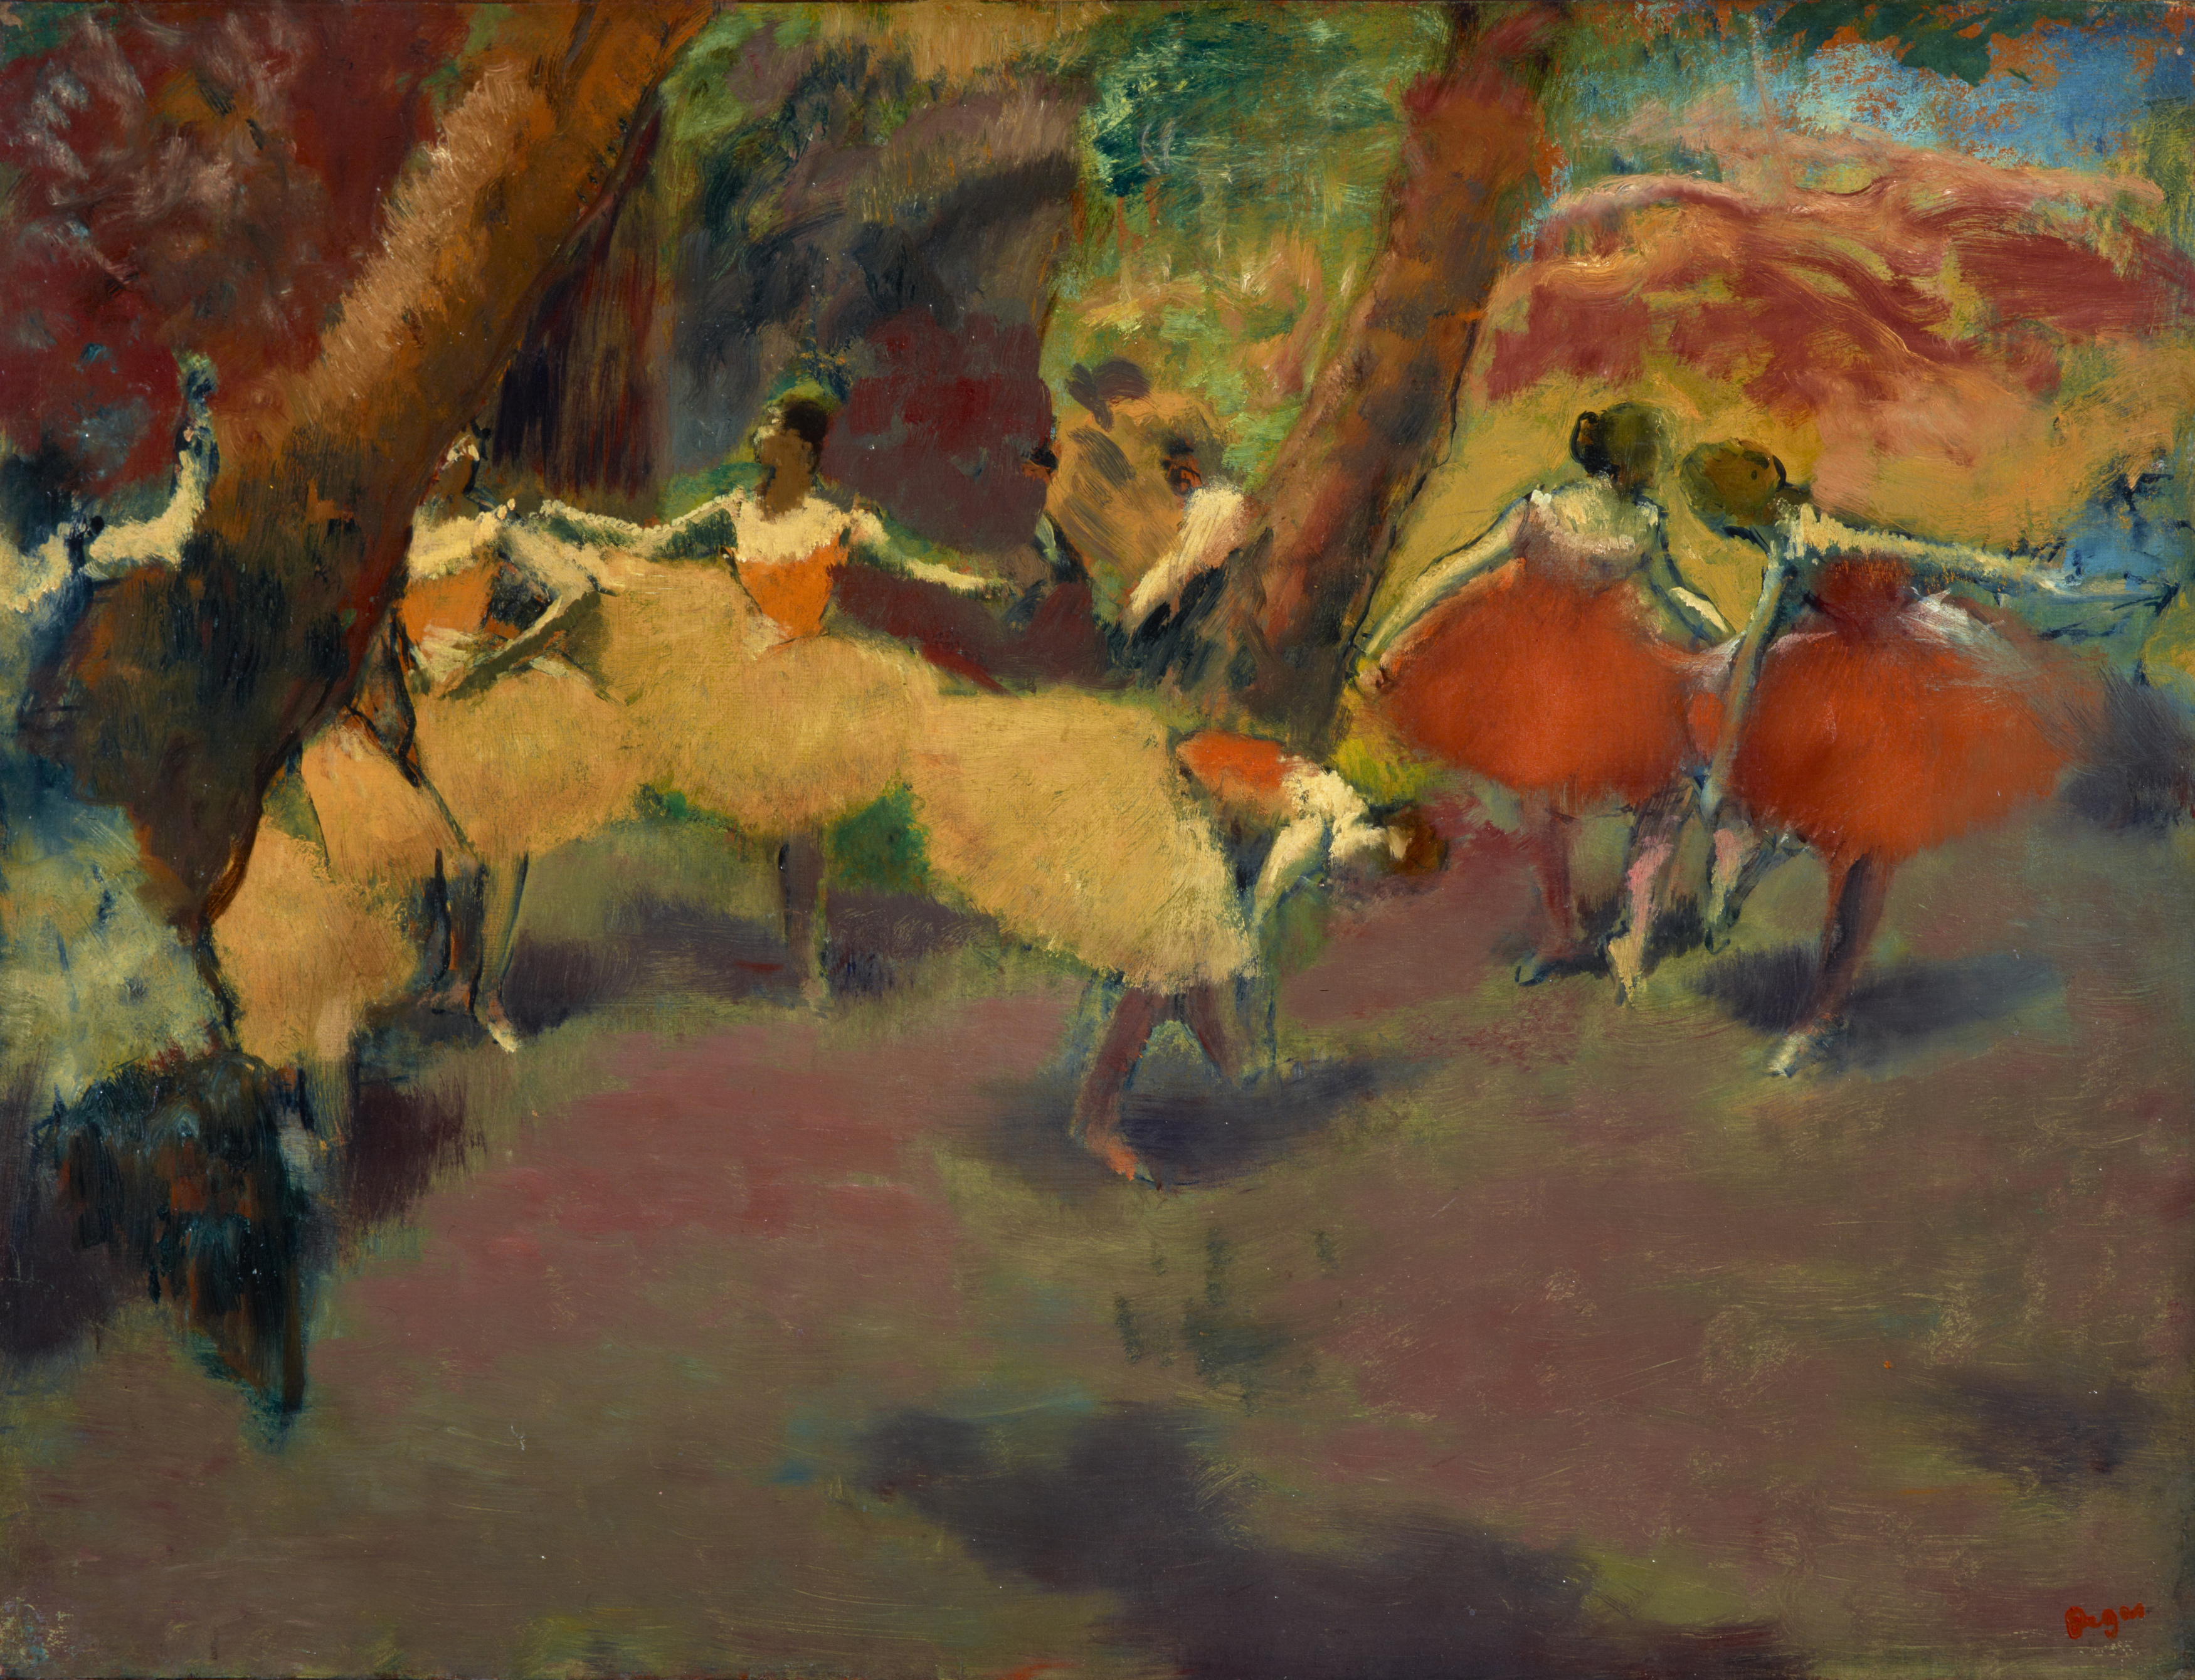 Avant la performance by Edgar Degas - About 1896 - 1898 